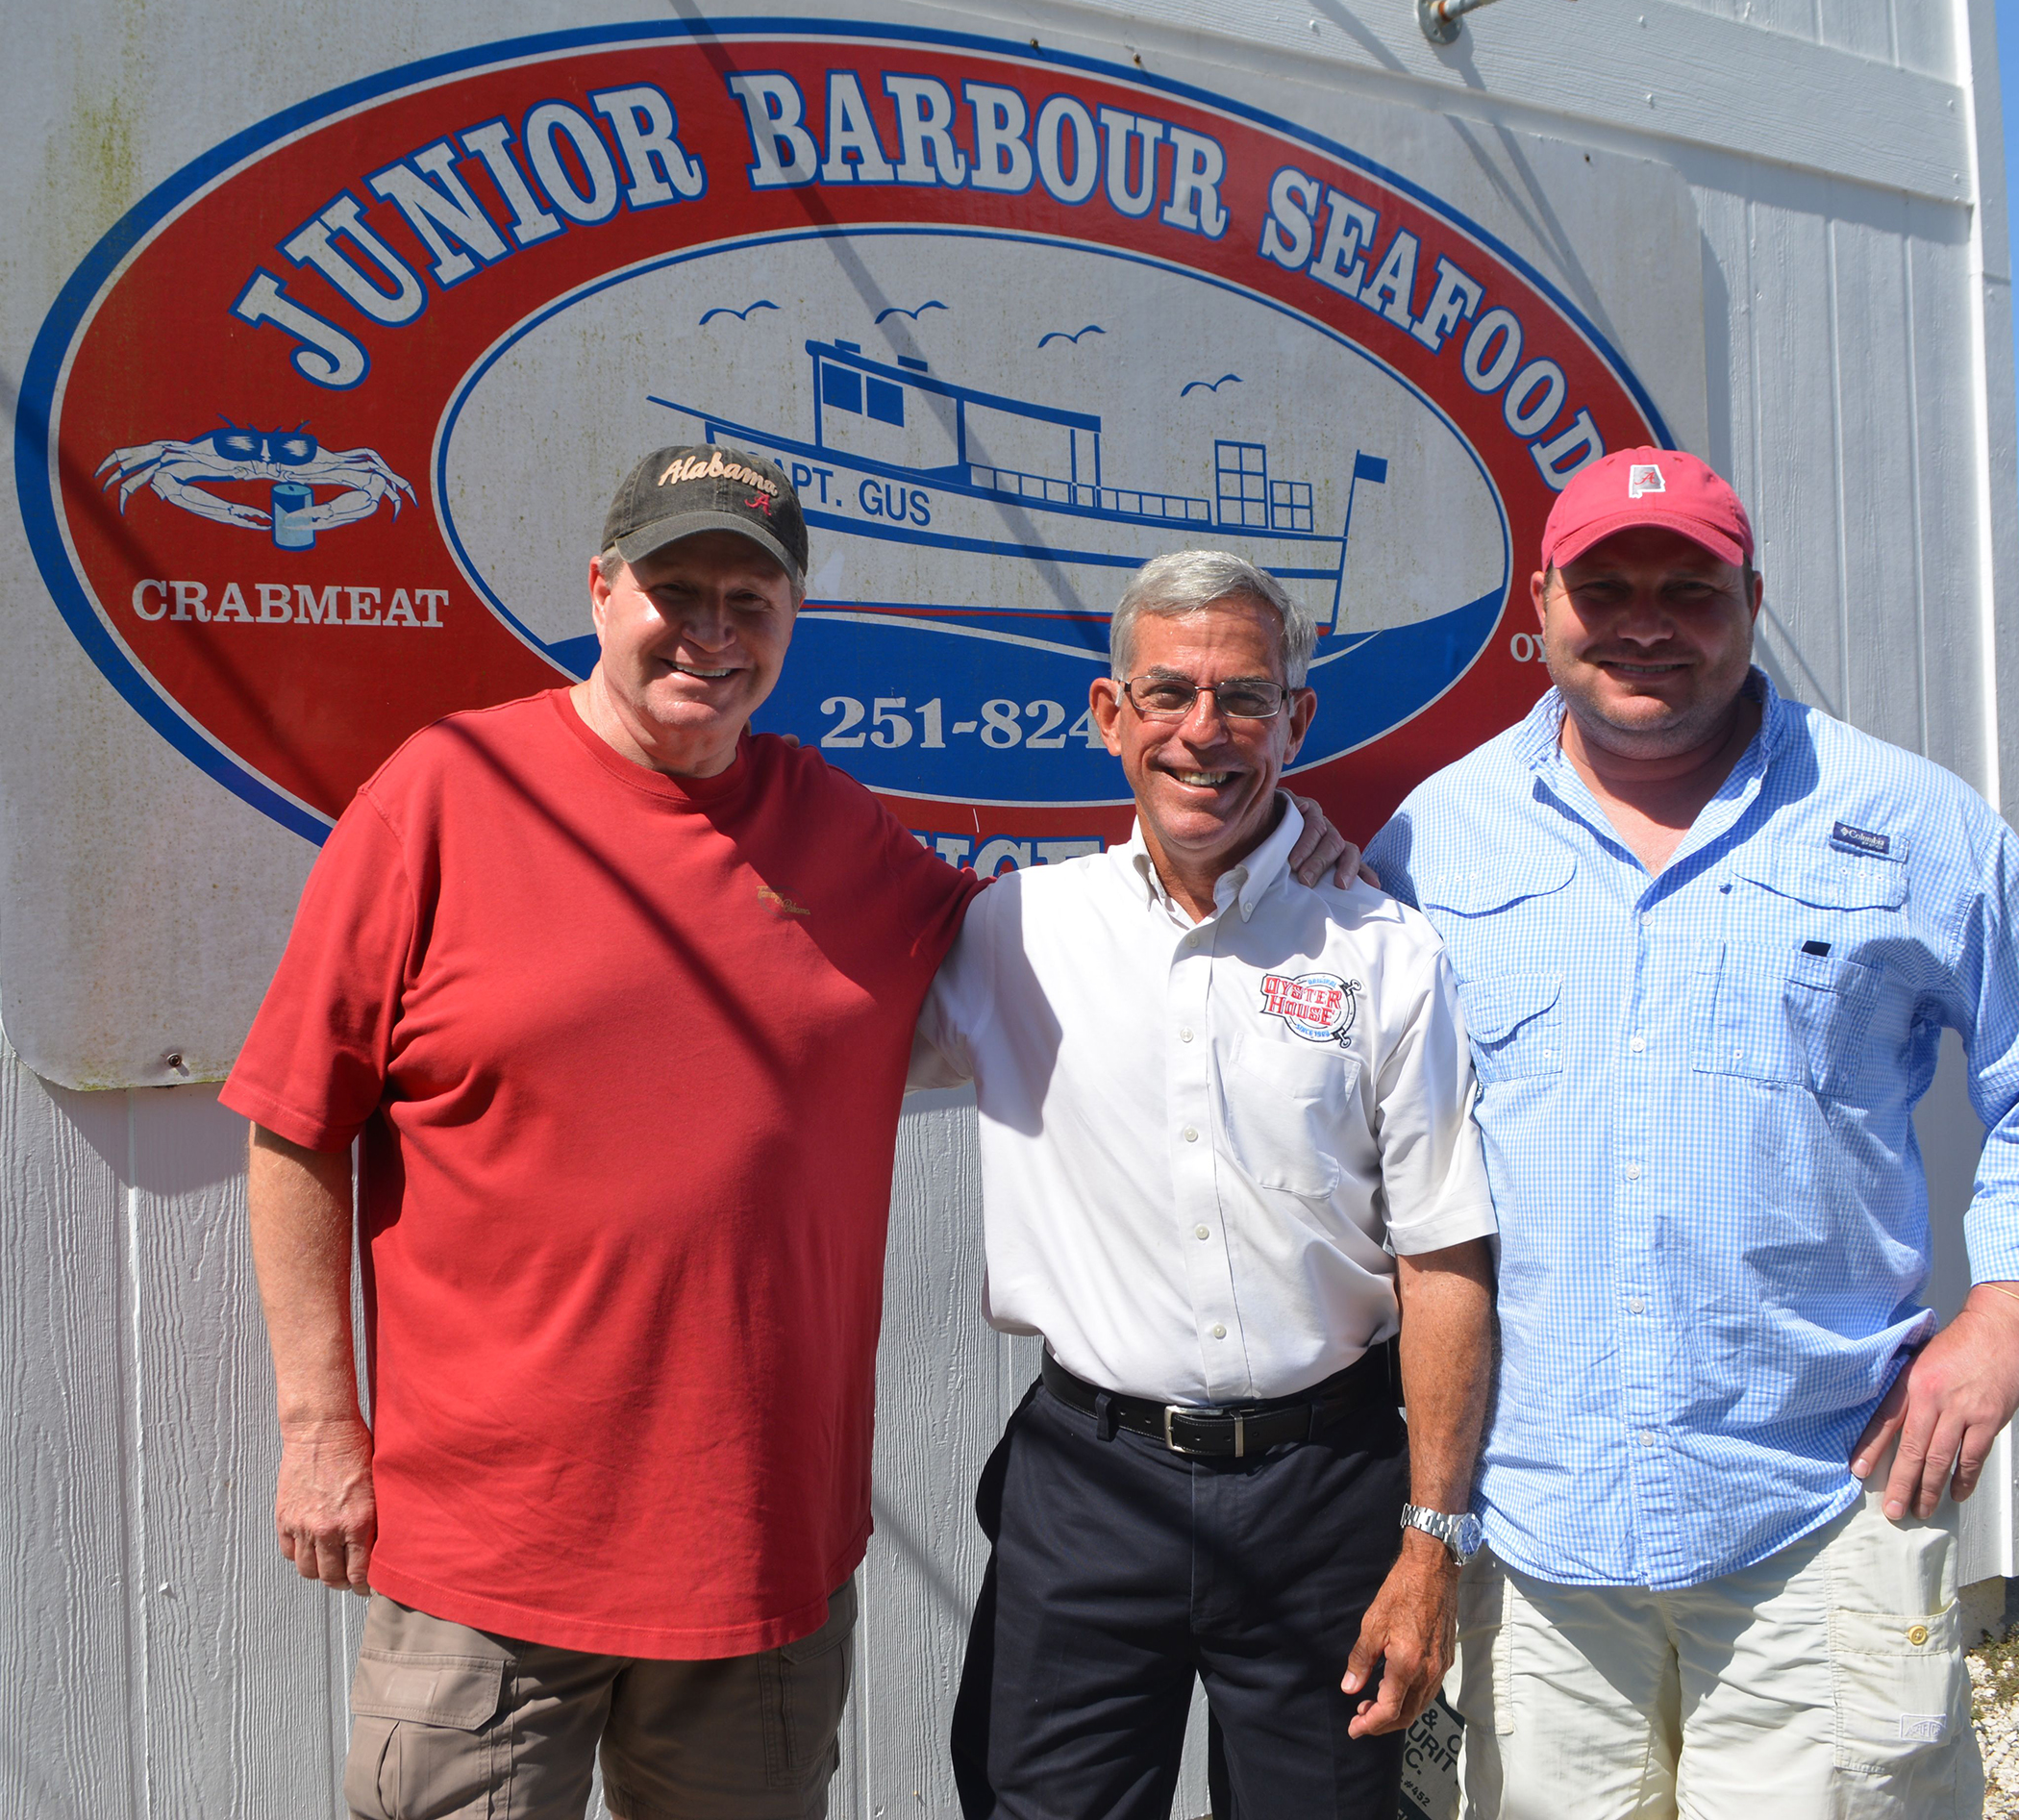 Raymond Barbour, David Dekle & Brad Barbour at Junior Barbour Seafood